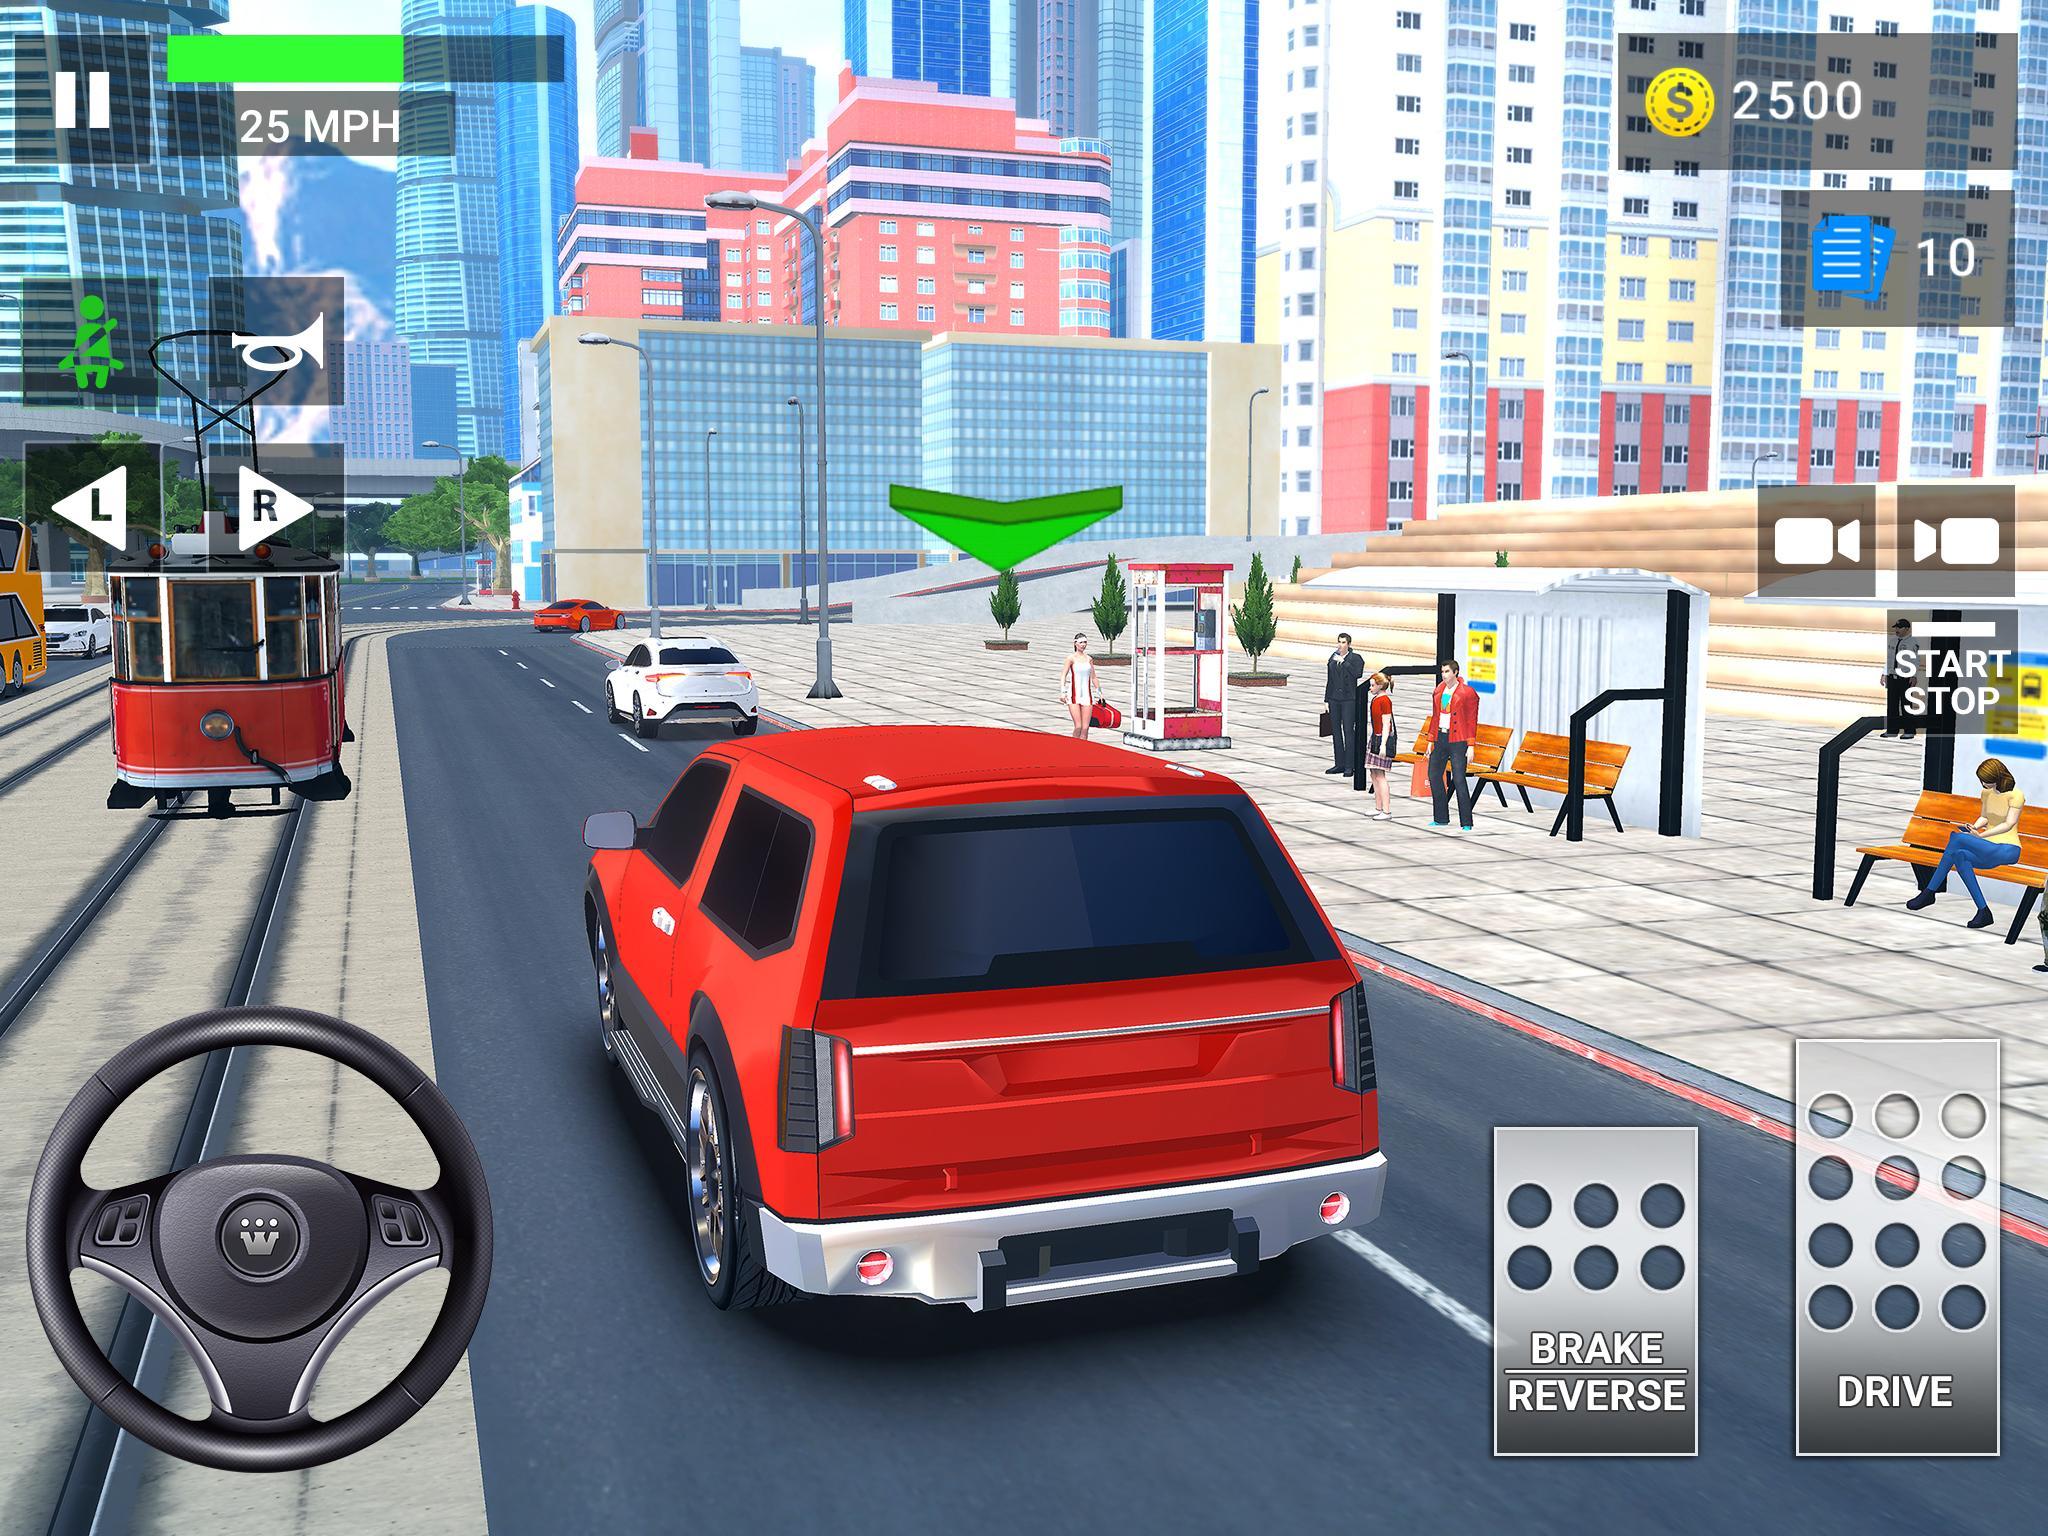 Driving Academy 2 Car Games & Driving School 2021 2.1 Screenshot 18